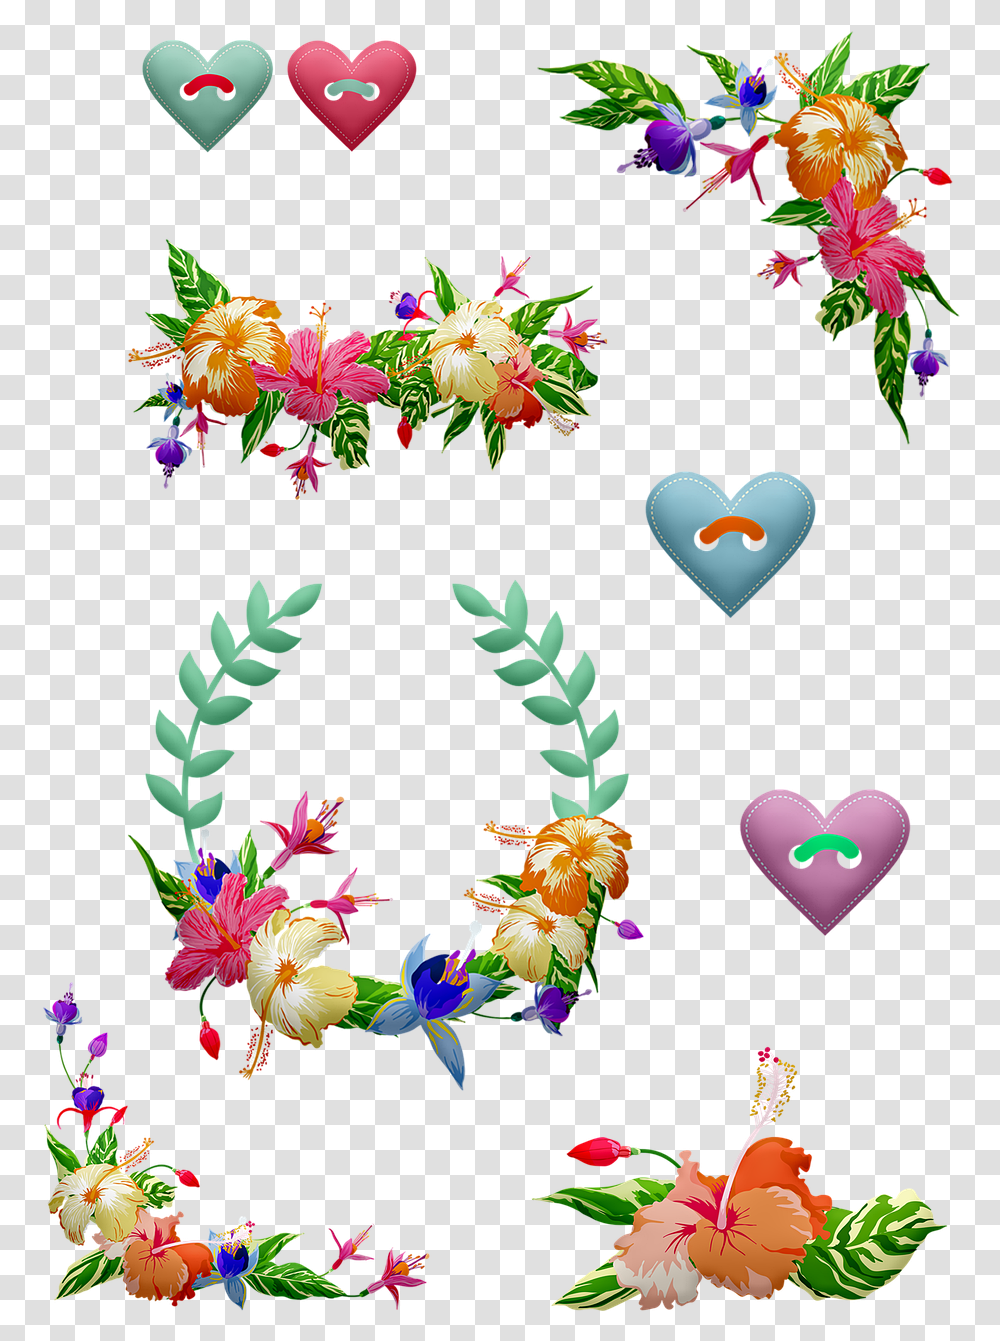 Tropical Flowers Wreaths Floral Free Image On Pixabay Flores Tropicales En, Graphics, Art, Floral Design, Pattern Transparent Png